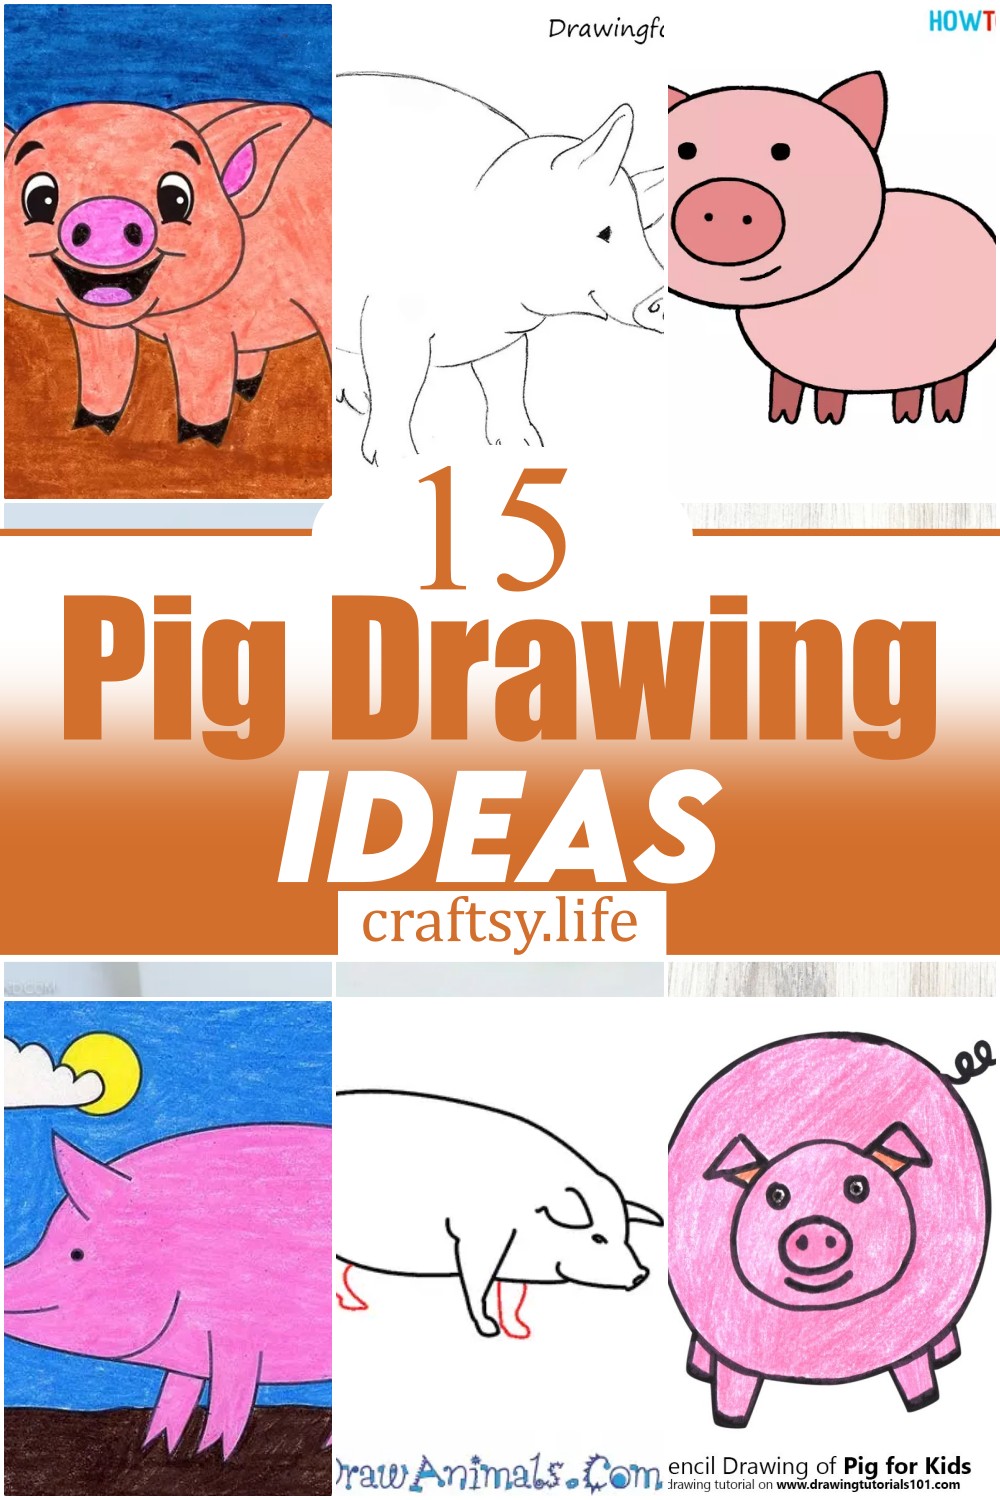 15 Pig Drawing Ideas